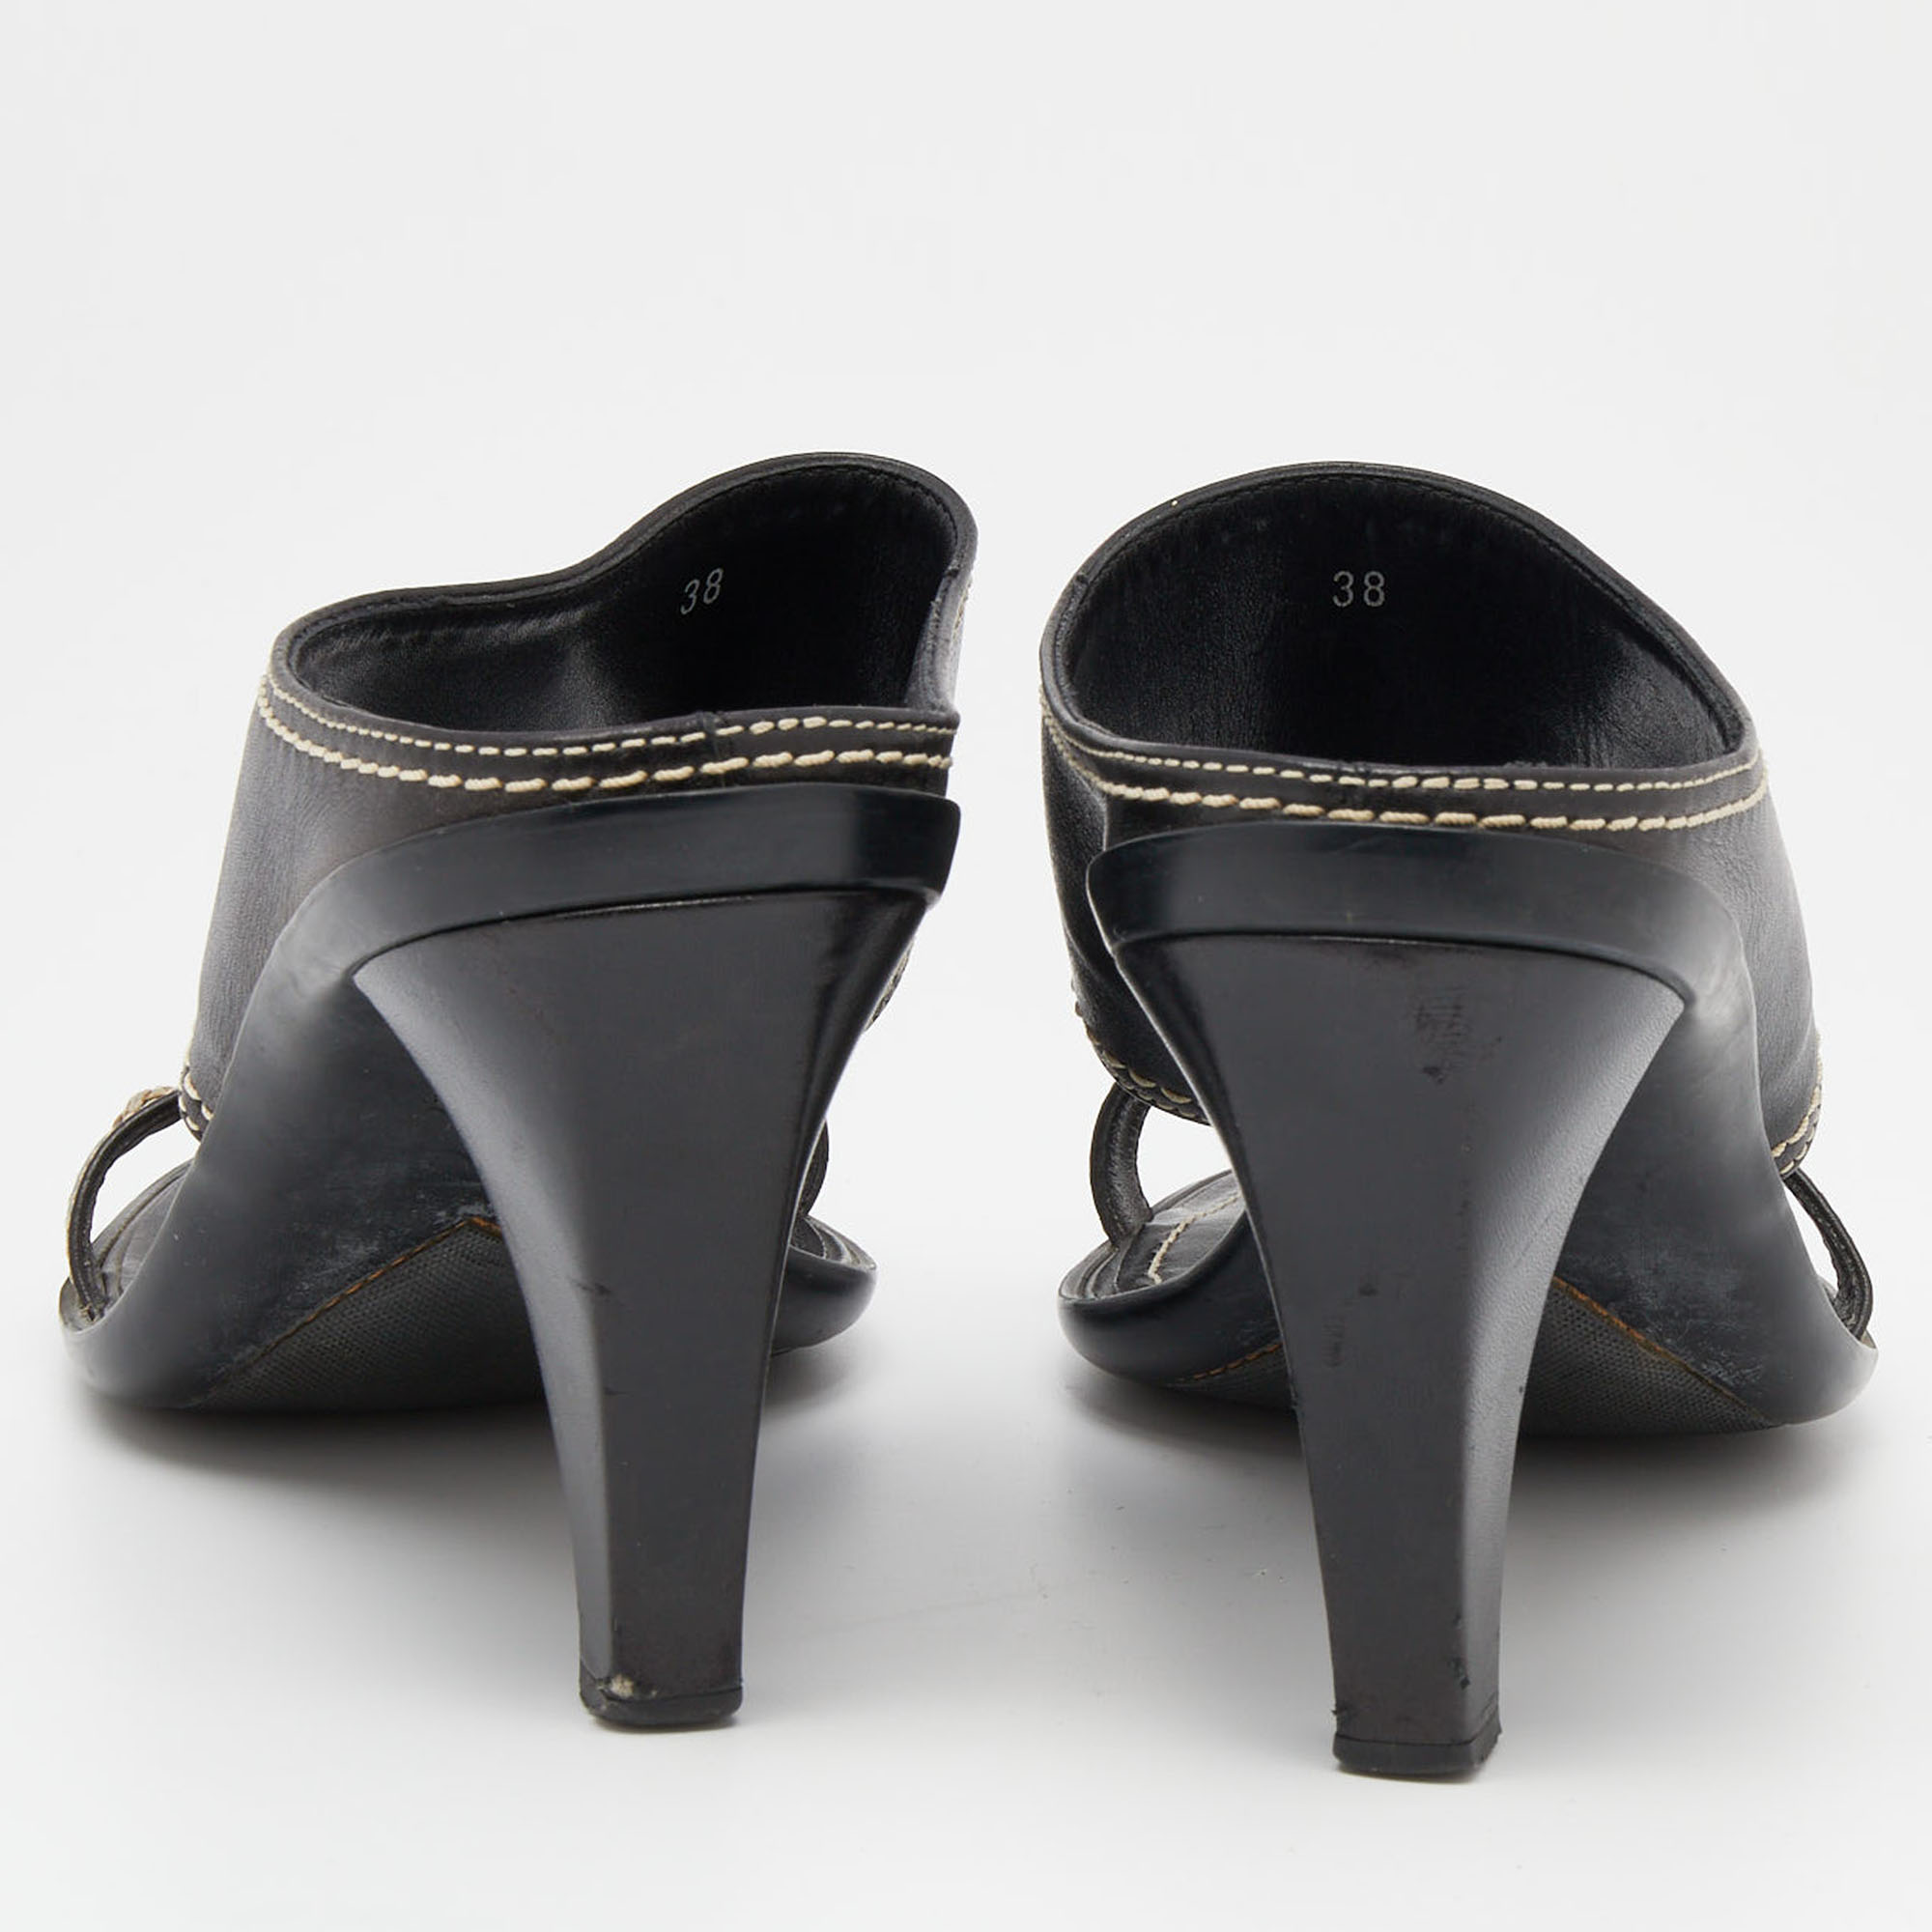 Tod's Black Leather Slide Sandals Size 38